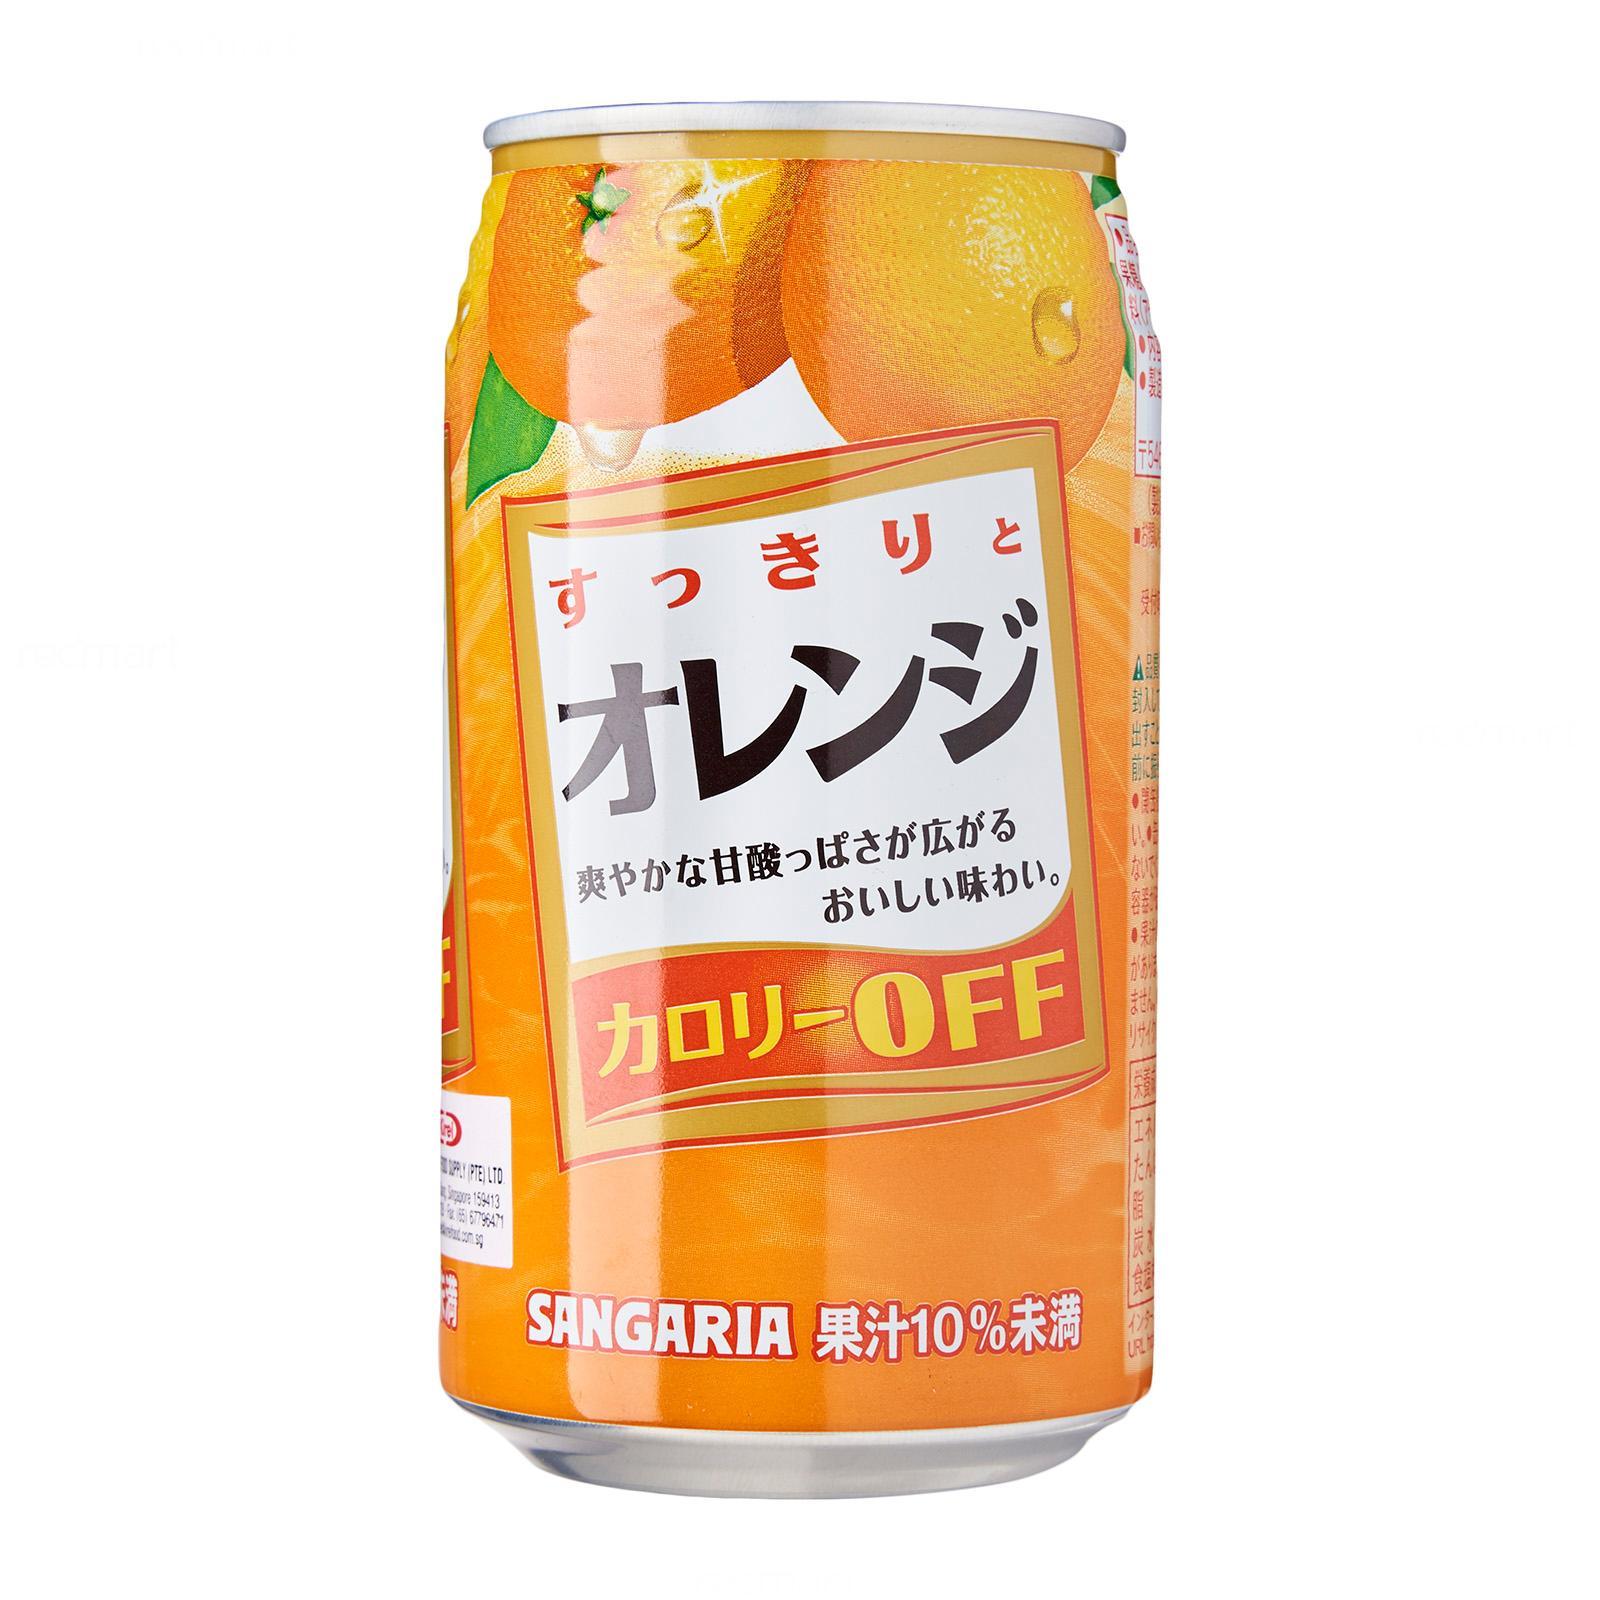 SANGARIA Sukkirito Orange Japanese Fruit Juice Drink 340ML - Kirei | Lazada  Singapore